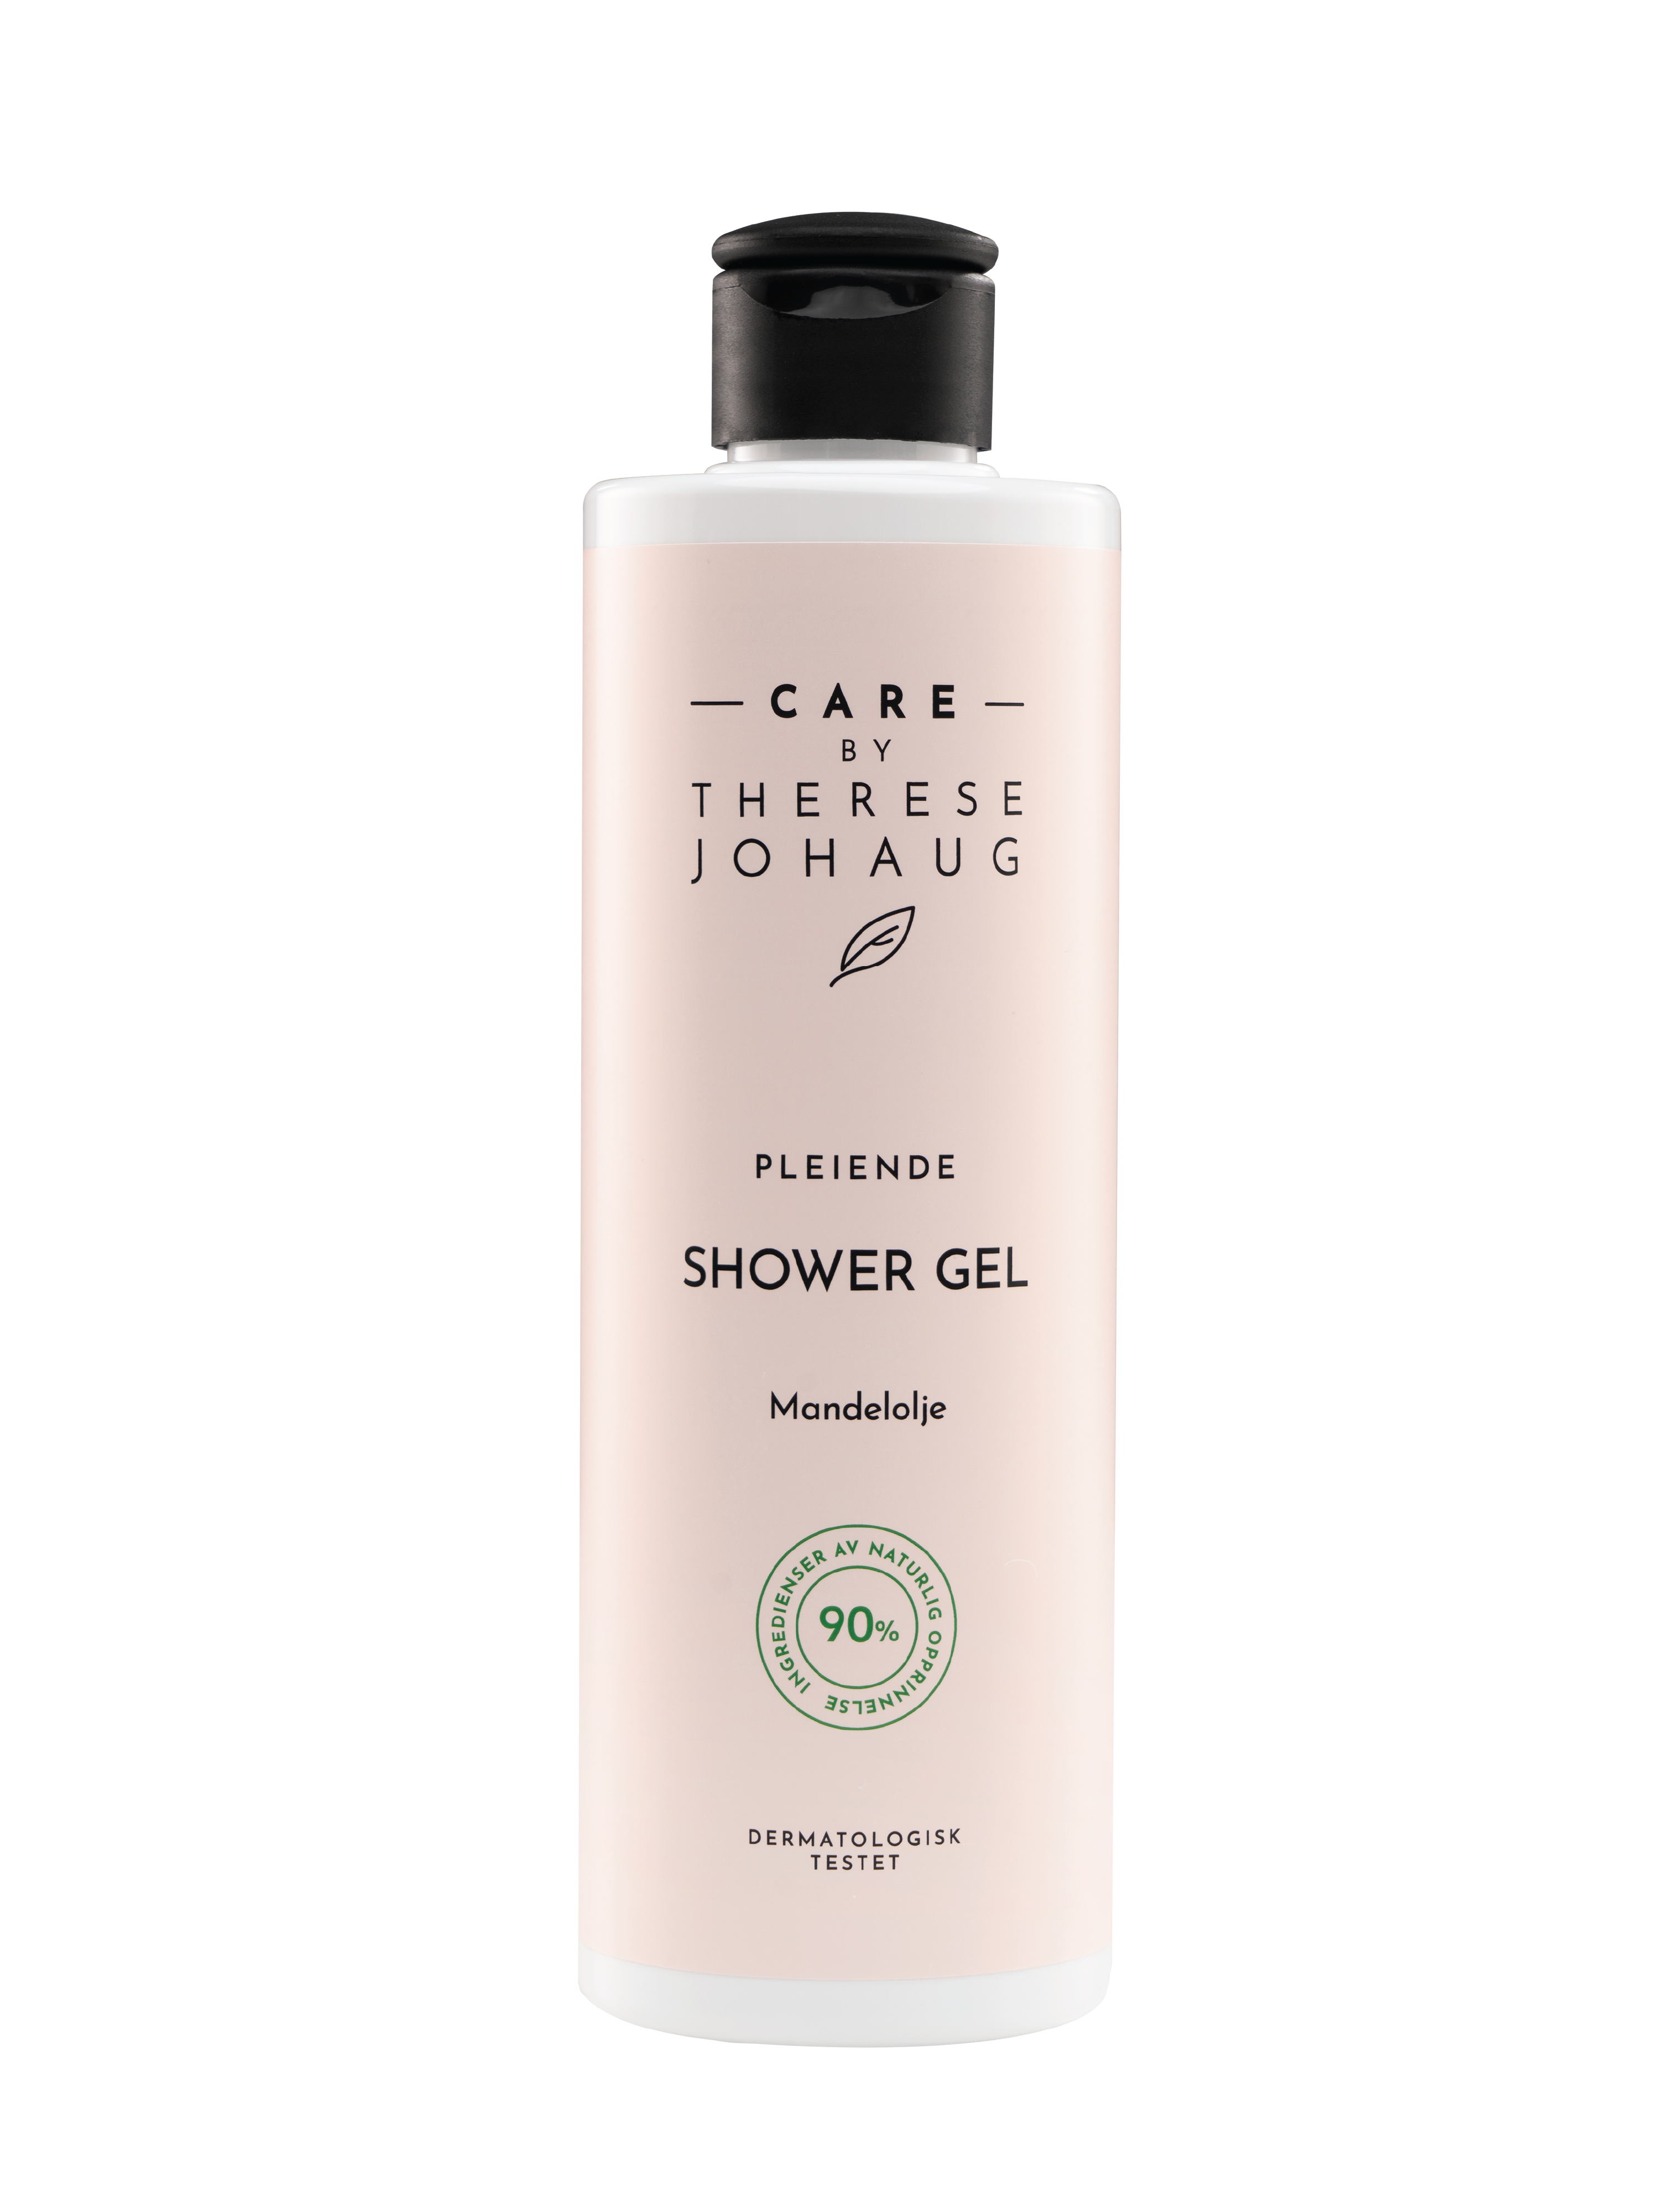 Care by Therese Johaug Shower Gel Mandelolje, 250 ml